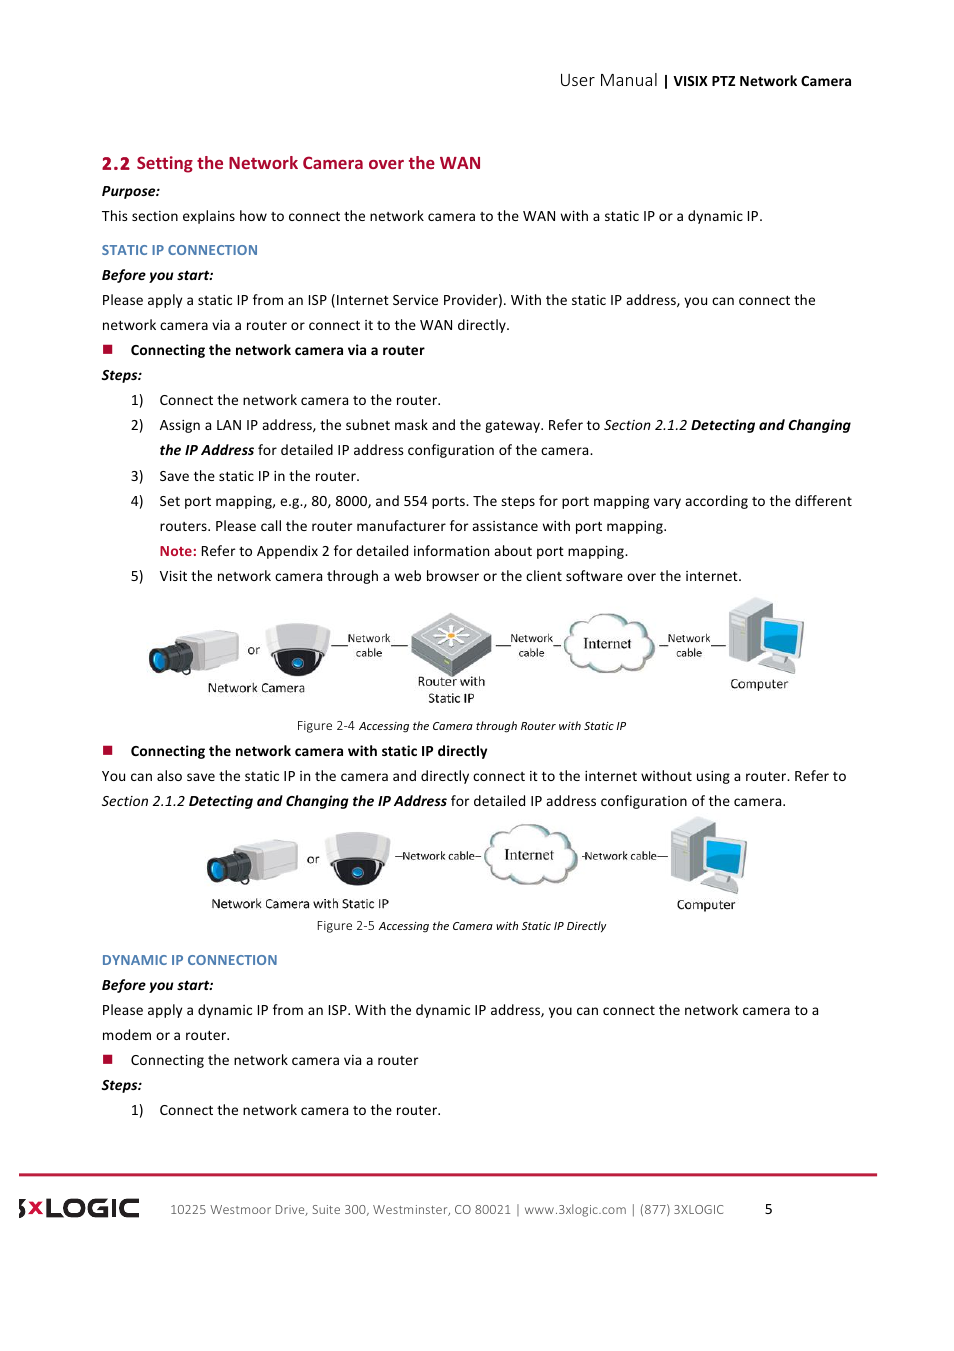 User manual, 2 setting the network camera over the wan | 3xLOGIC VISIX Camera User Manual | Page 13 / 90